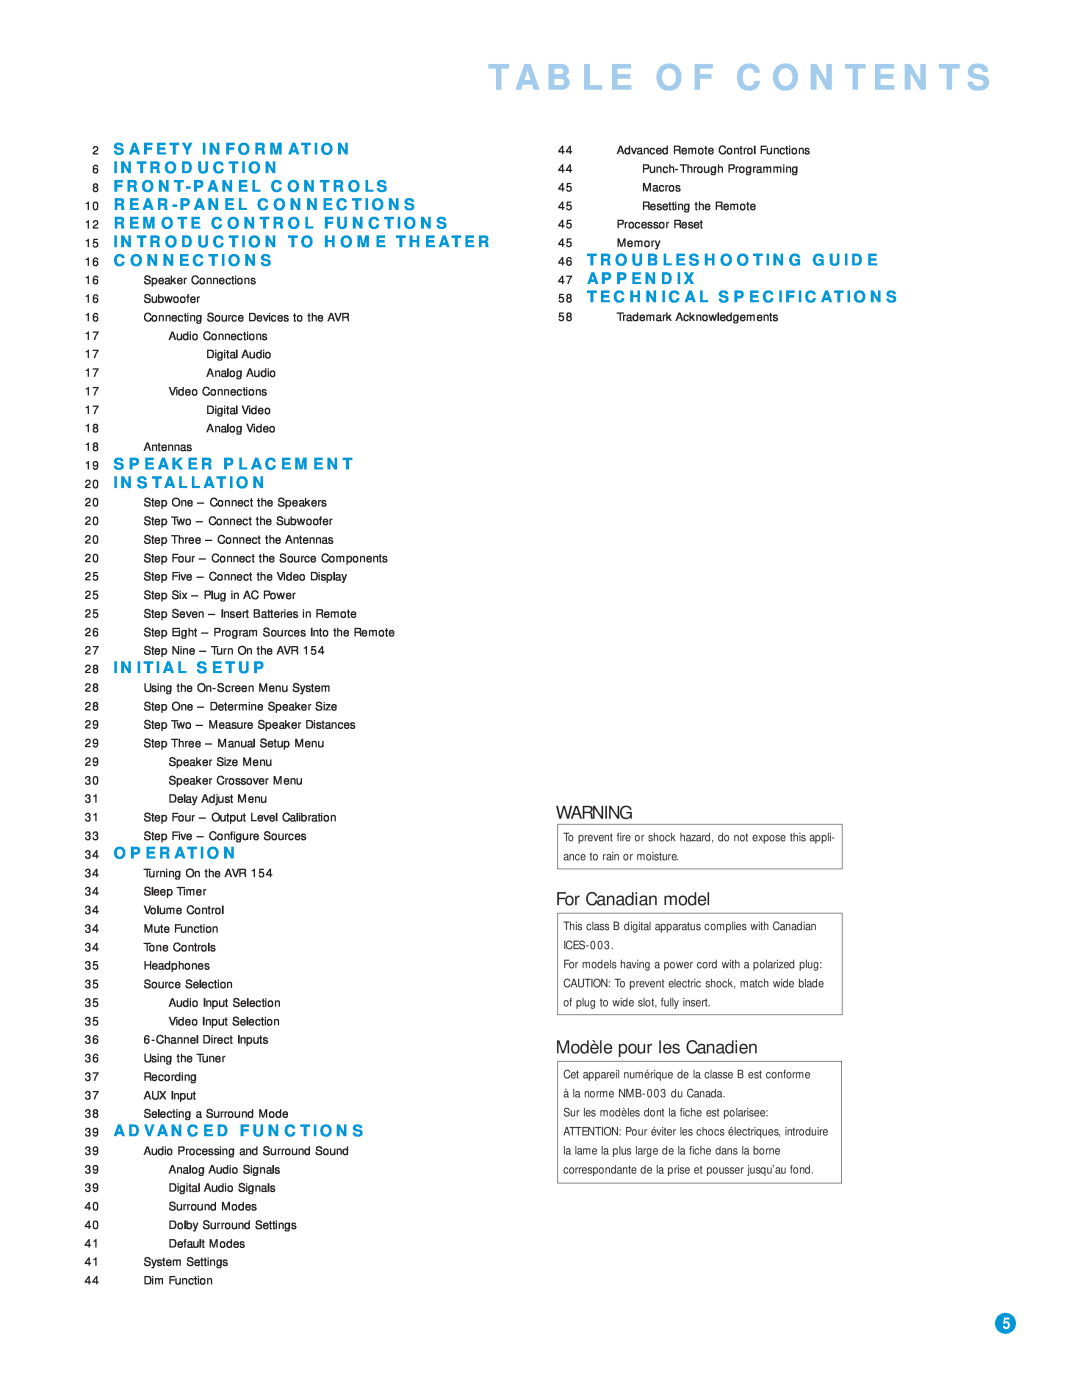 Harman-Kardon AVR 154 owner manual Table Of Contents, For Canadian model, Modèle pour les Canadien 